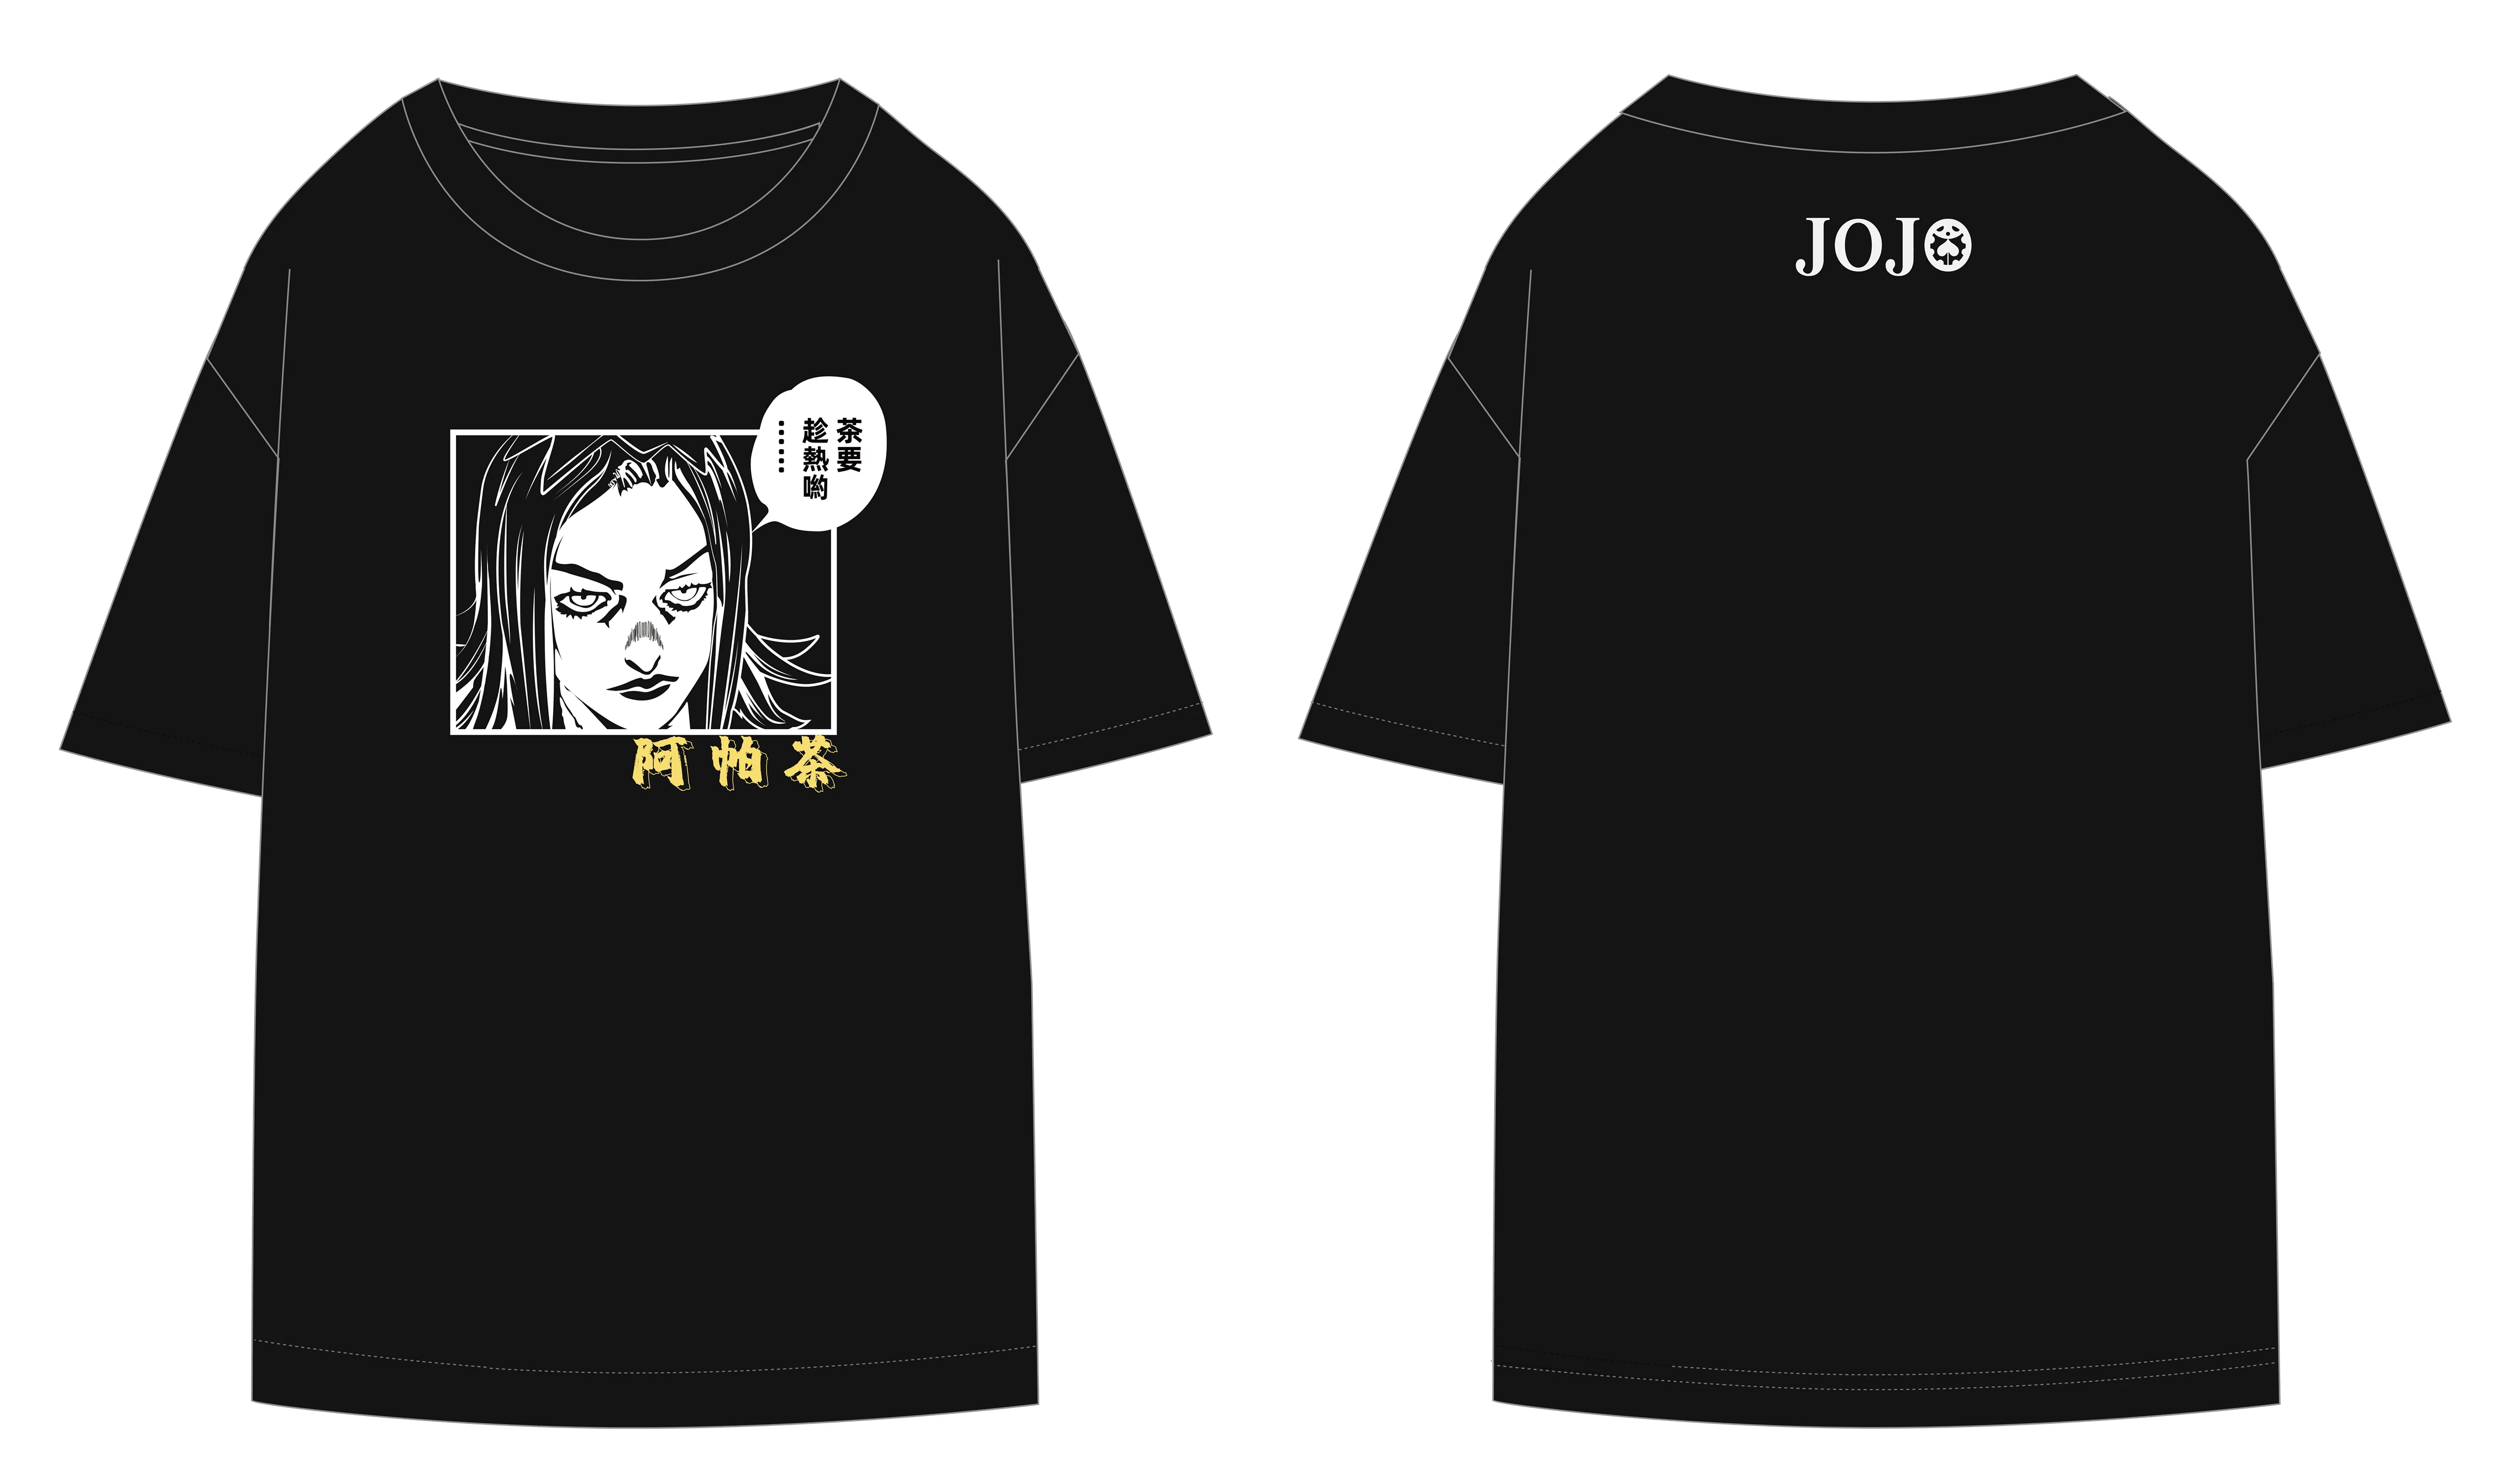 Anime JK JoJo's Bizarre Adventure Cosplay Shirt Related T-Shirt Tops Tee Women Men Casual tshirt t shirt Costume Short sleeve